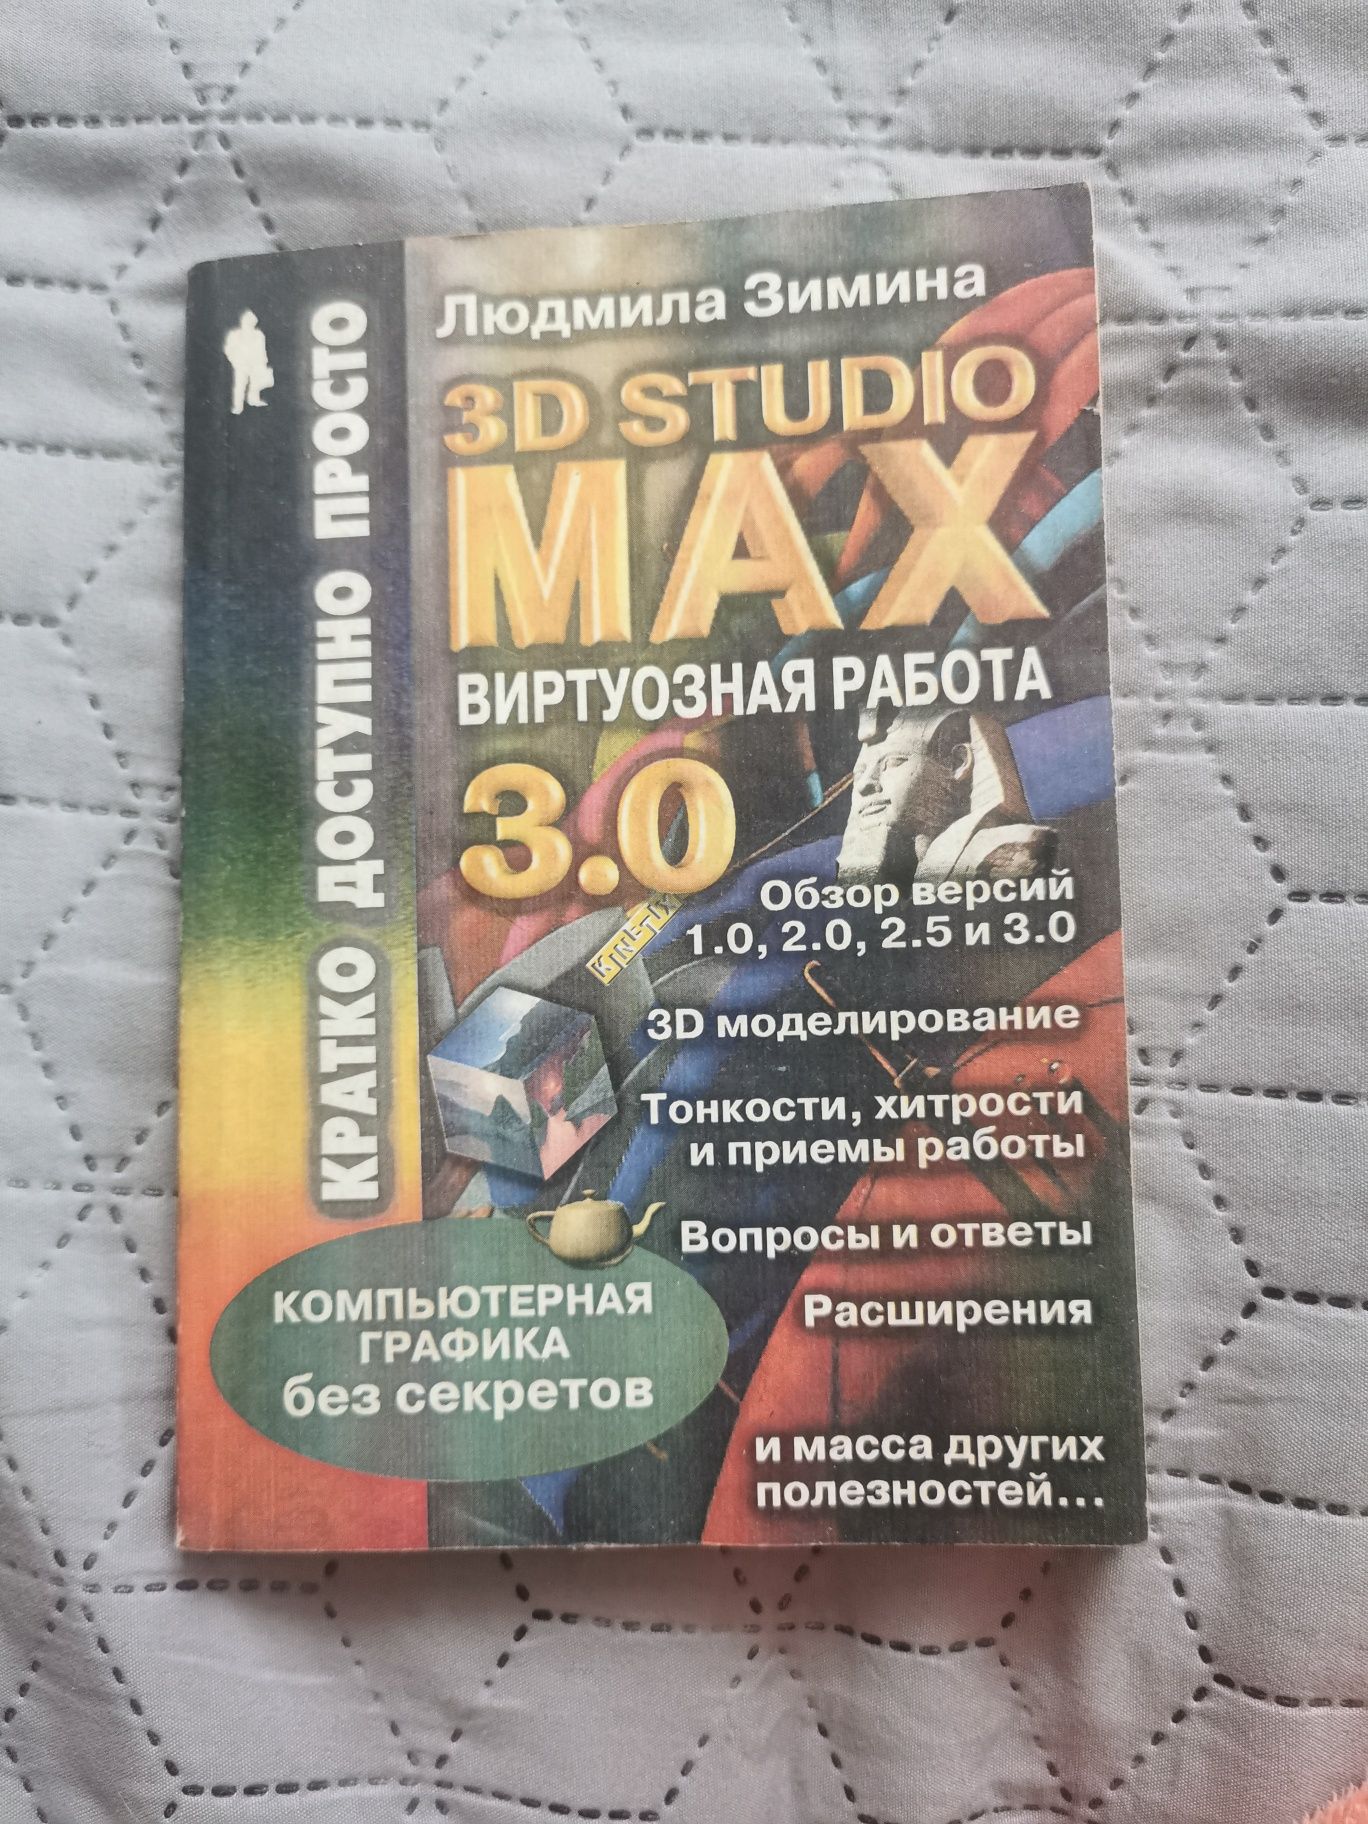 Учебник по 3D Studio MAX